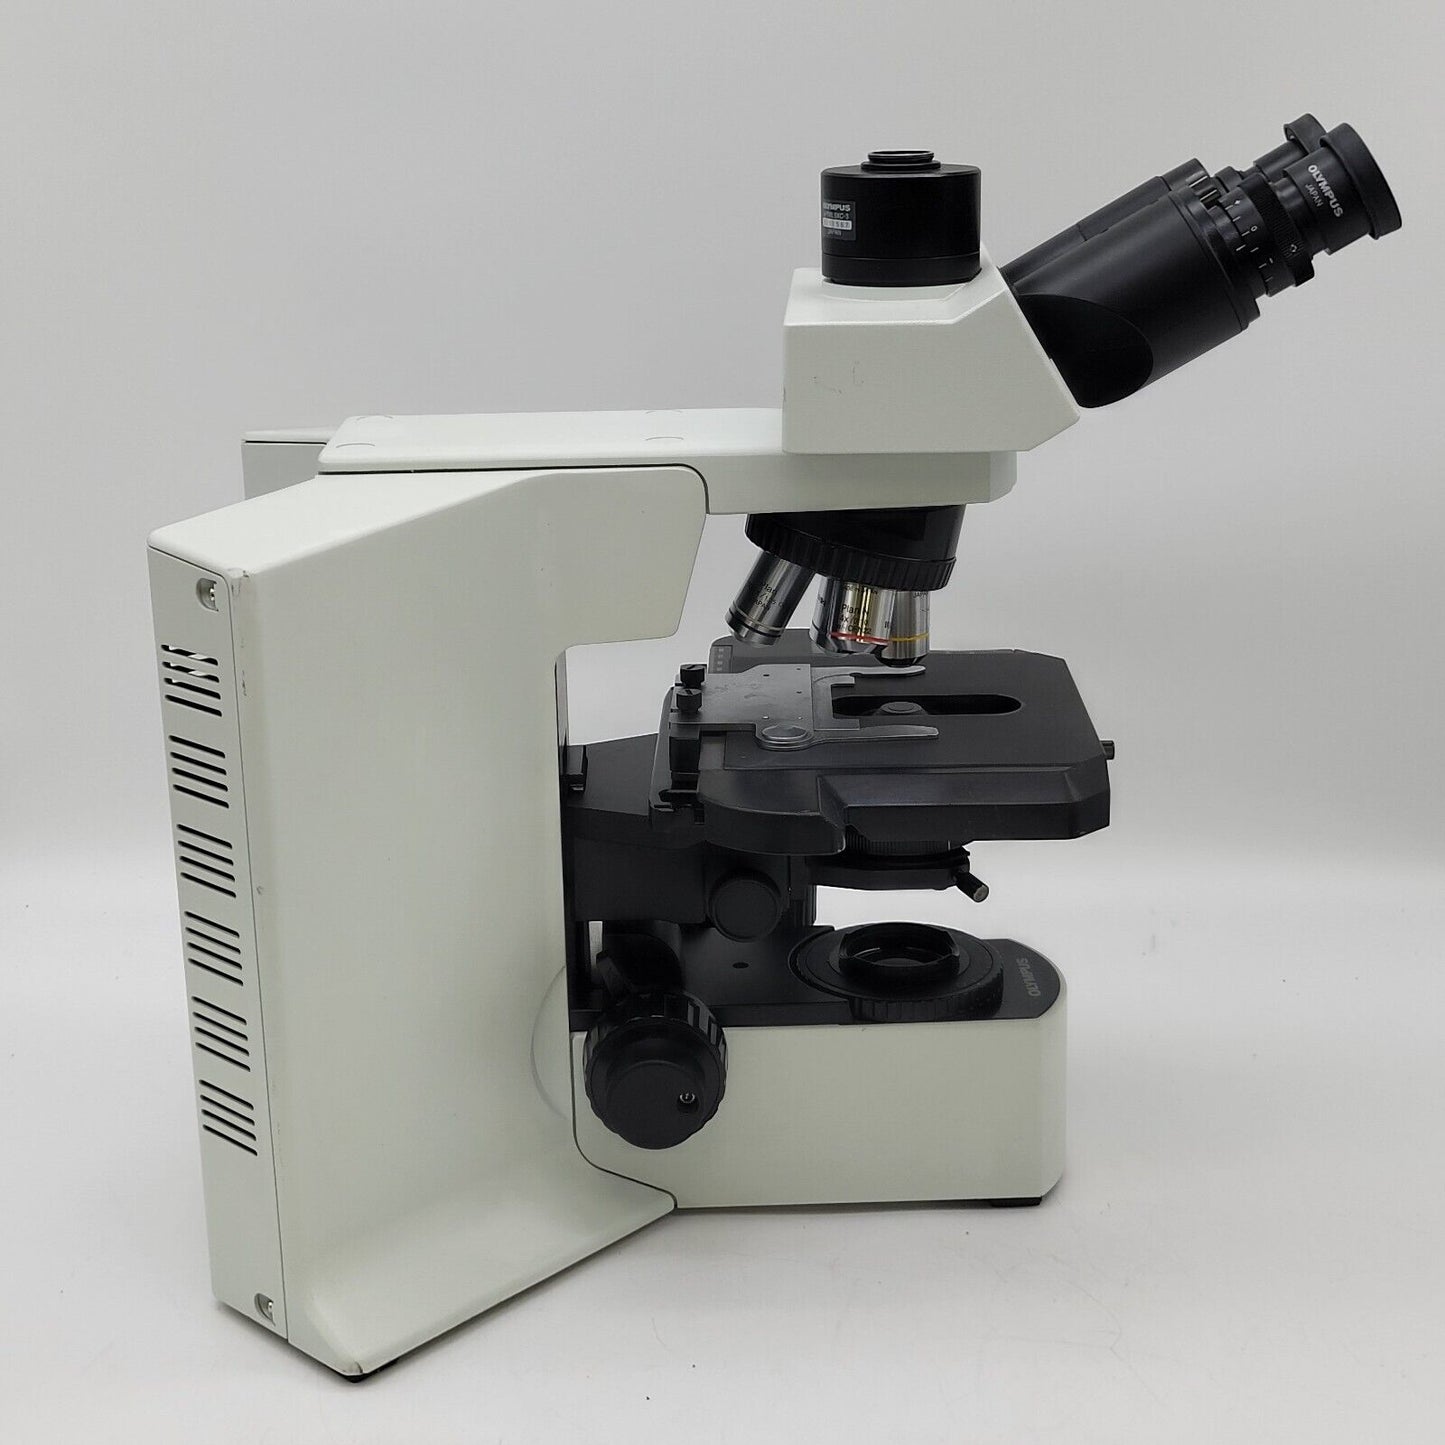 Olympus Microscope BX51 with LED, Trinocular Head, & 100x Objective - microscopemarketplace